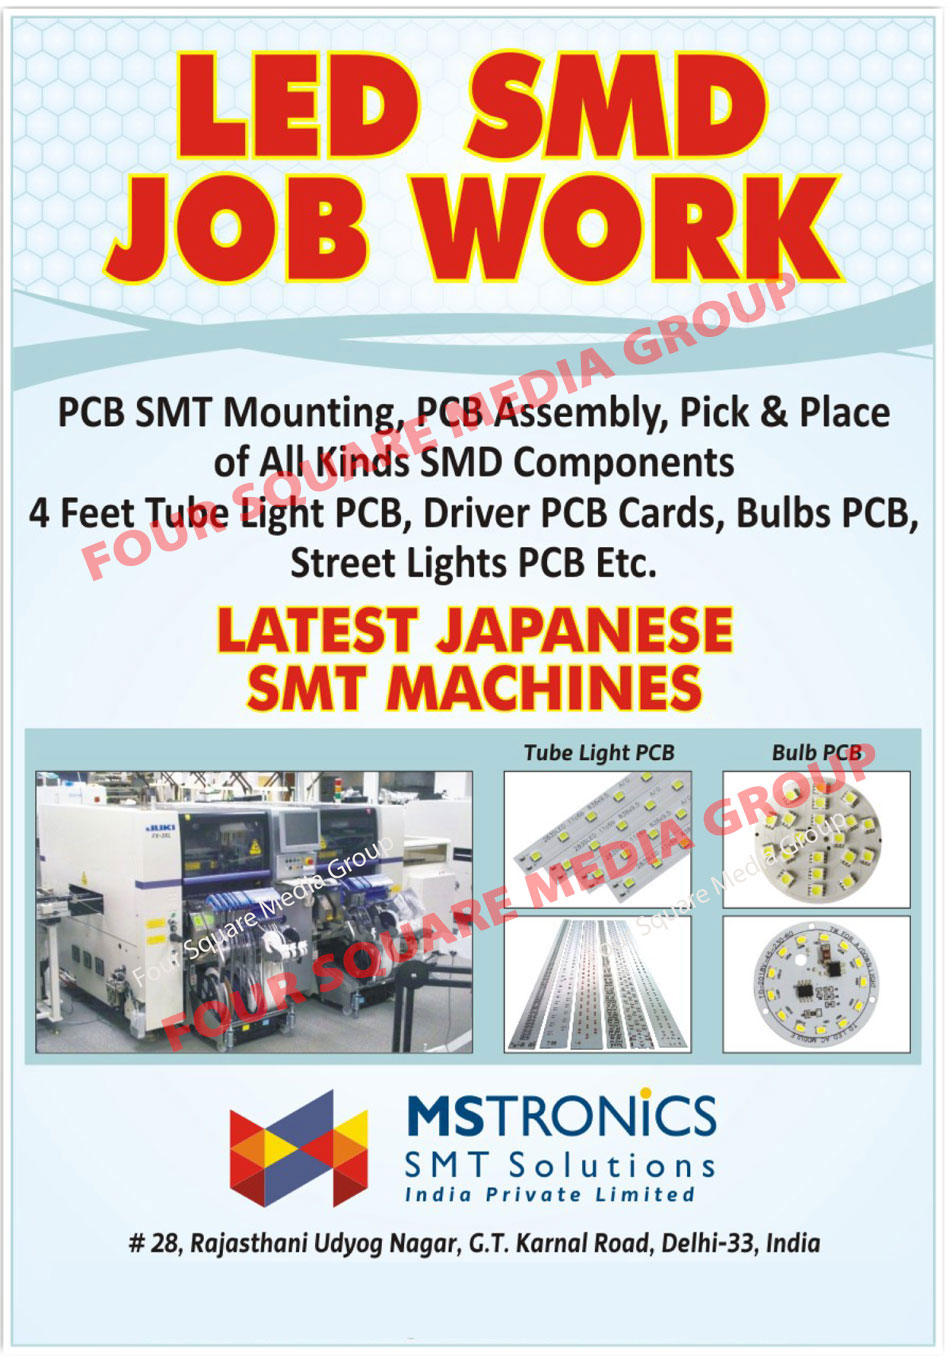 Led SMD Job Works, PCB SMT Mounting, PCB Assembly, SMD Component Pick Place Service, 4 Feet Tube Light PCB, Driver PCB Cards, Bulb PCB, Street Light PCB